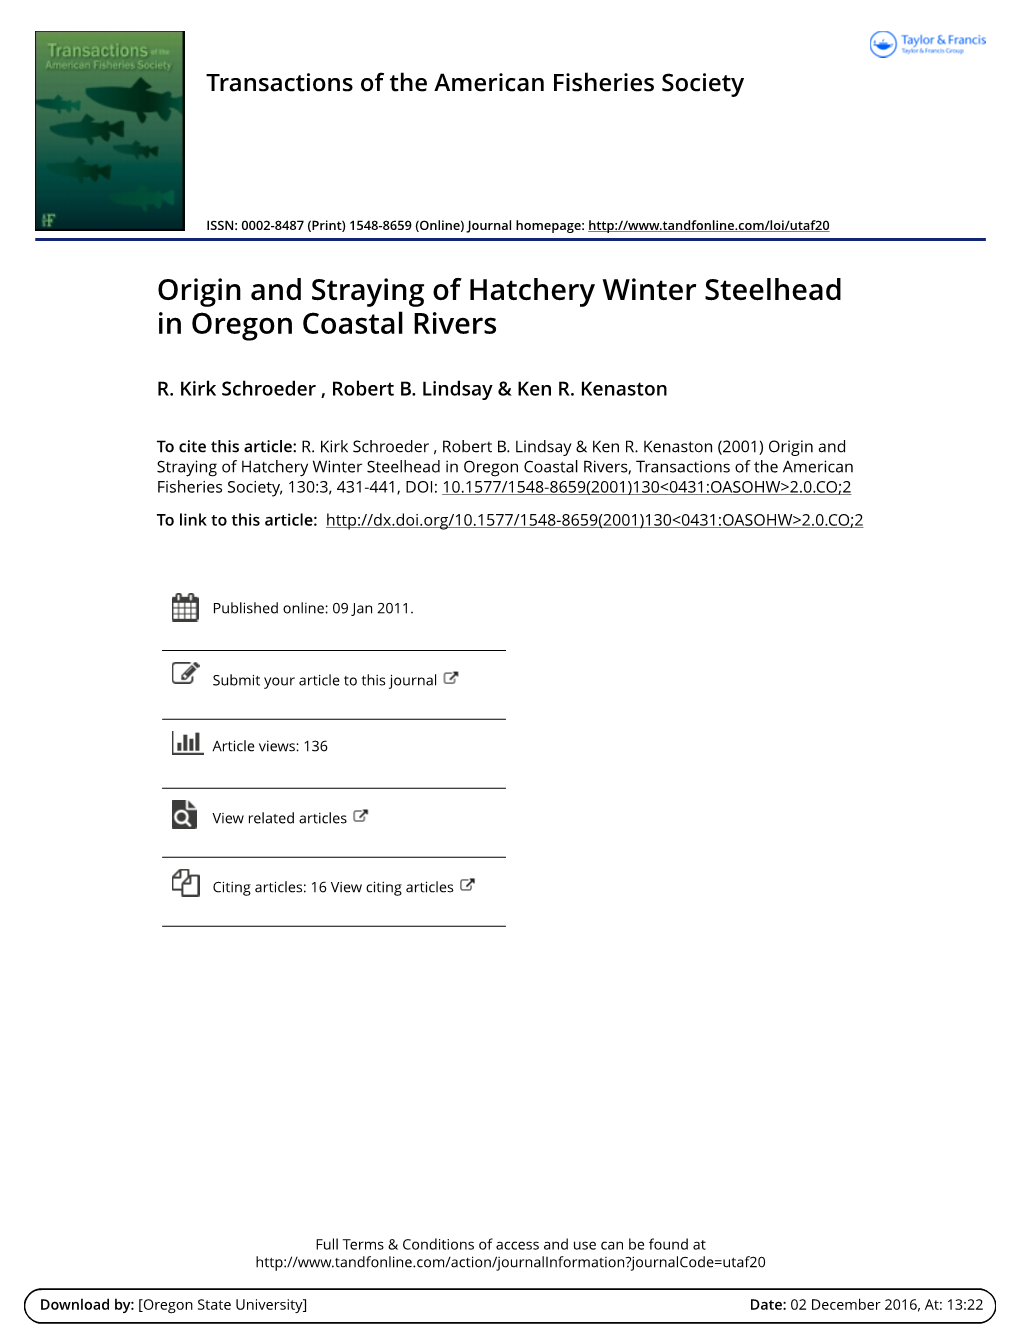 Origin and Straying of Hatchery Winter Steelhead in Oregon Coastal Rivers